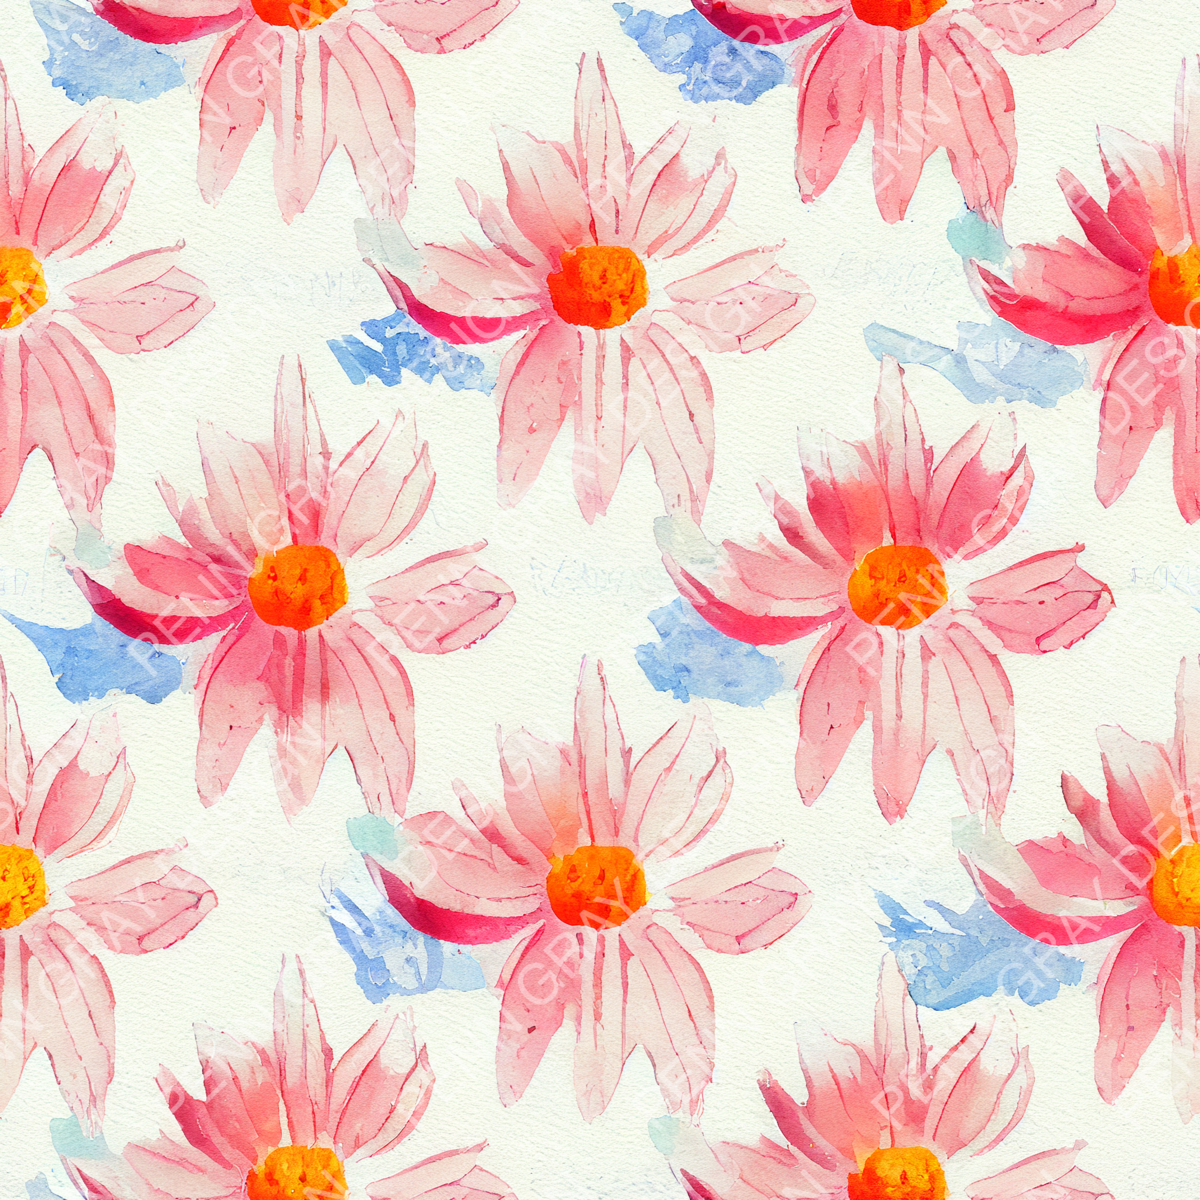 daisies-05-(watermarked)